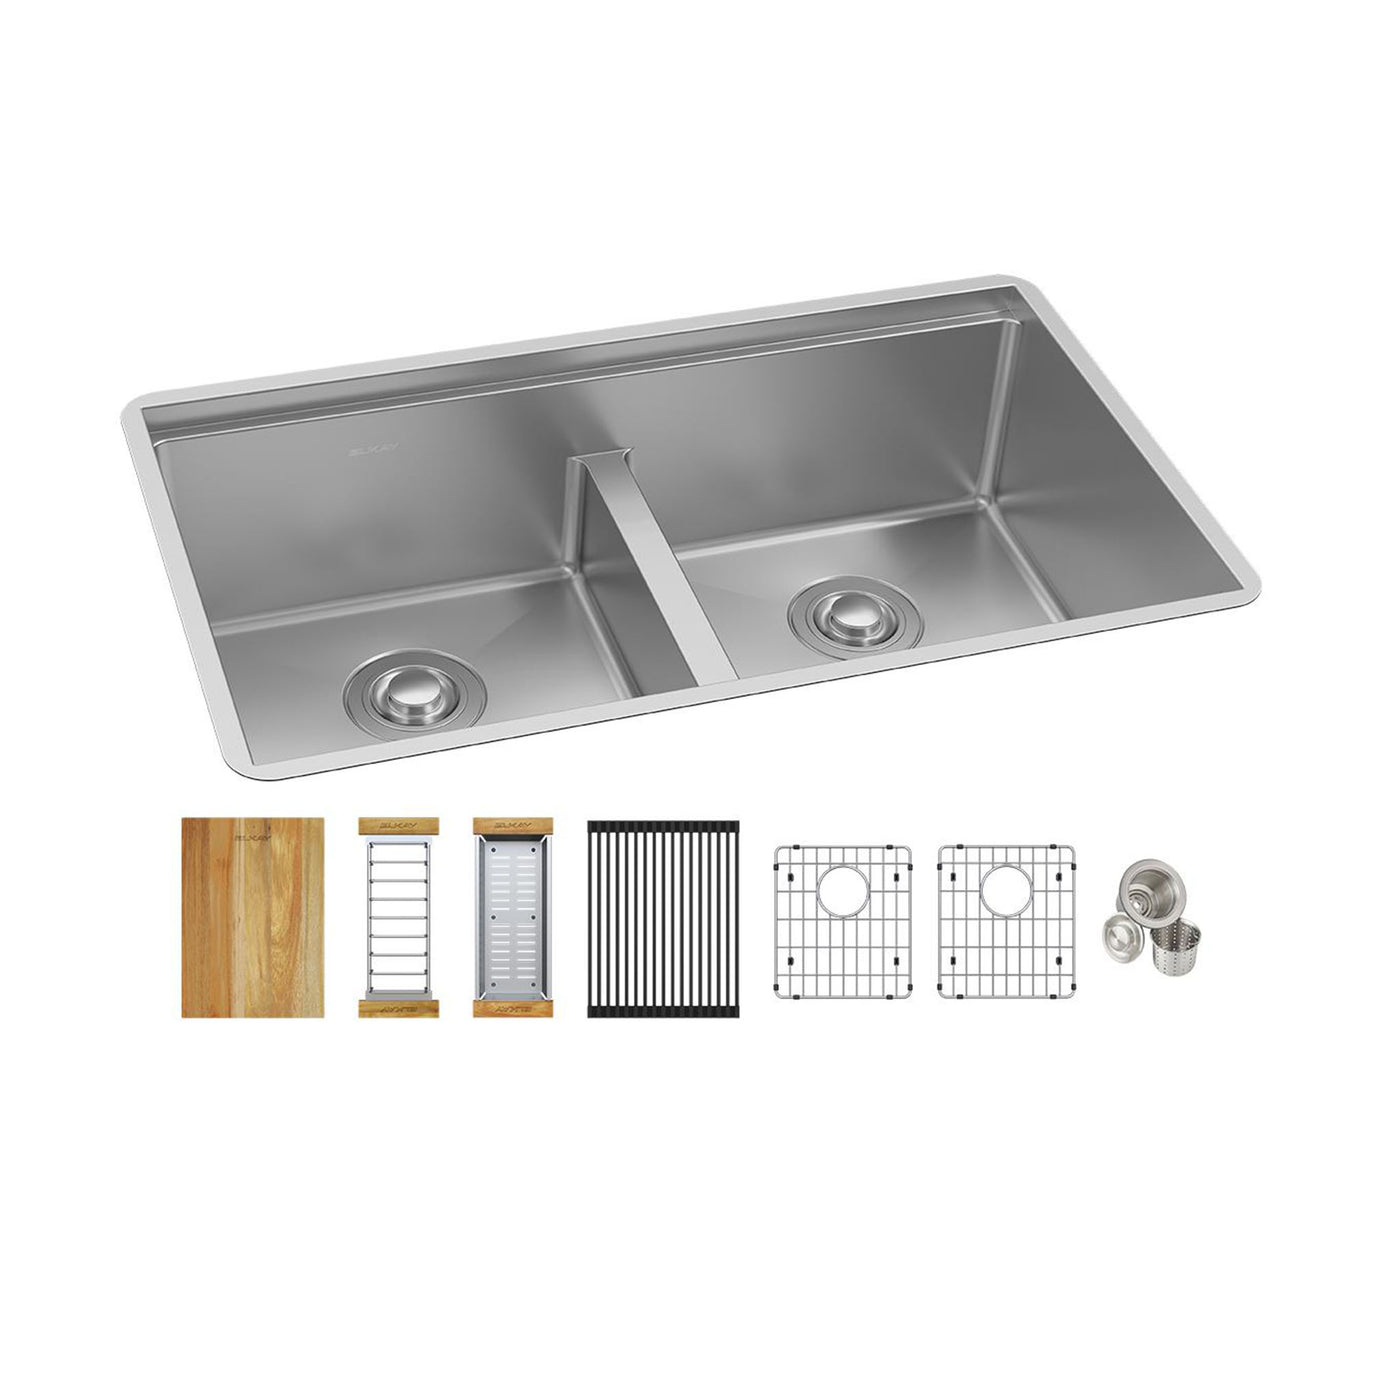 31-1/2" x 18-1/2" x 9" Elkay Crosstown 18 Gauge Workstation Stainless Steel Equal Double Bowl Sink Kit with Aqua Divide